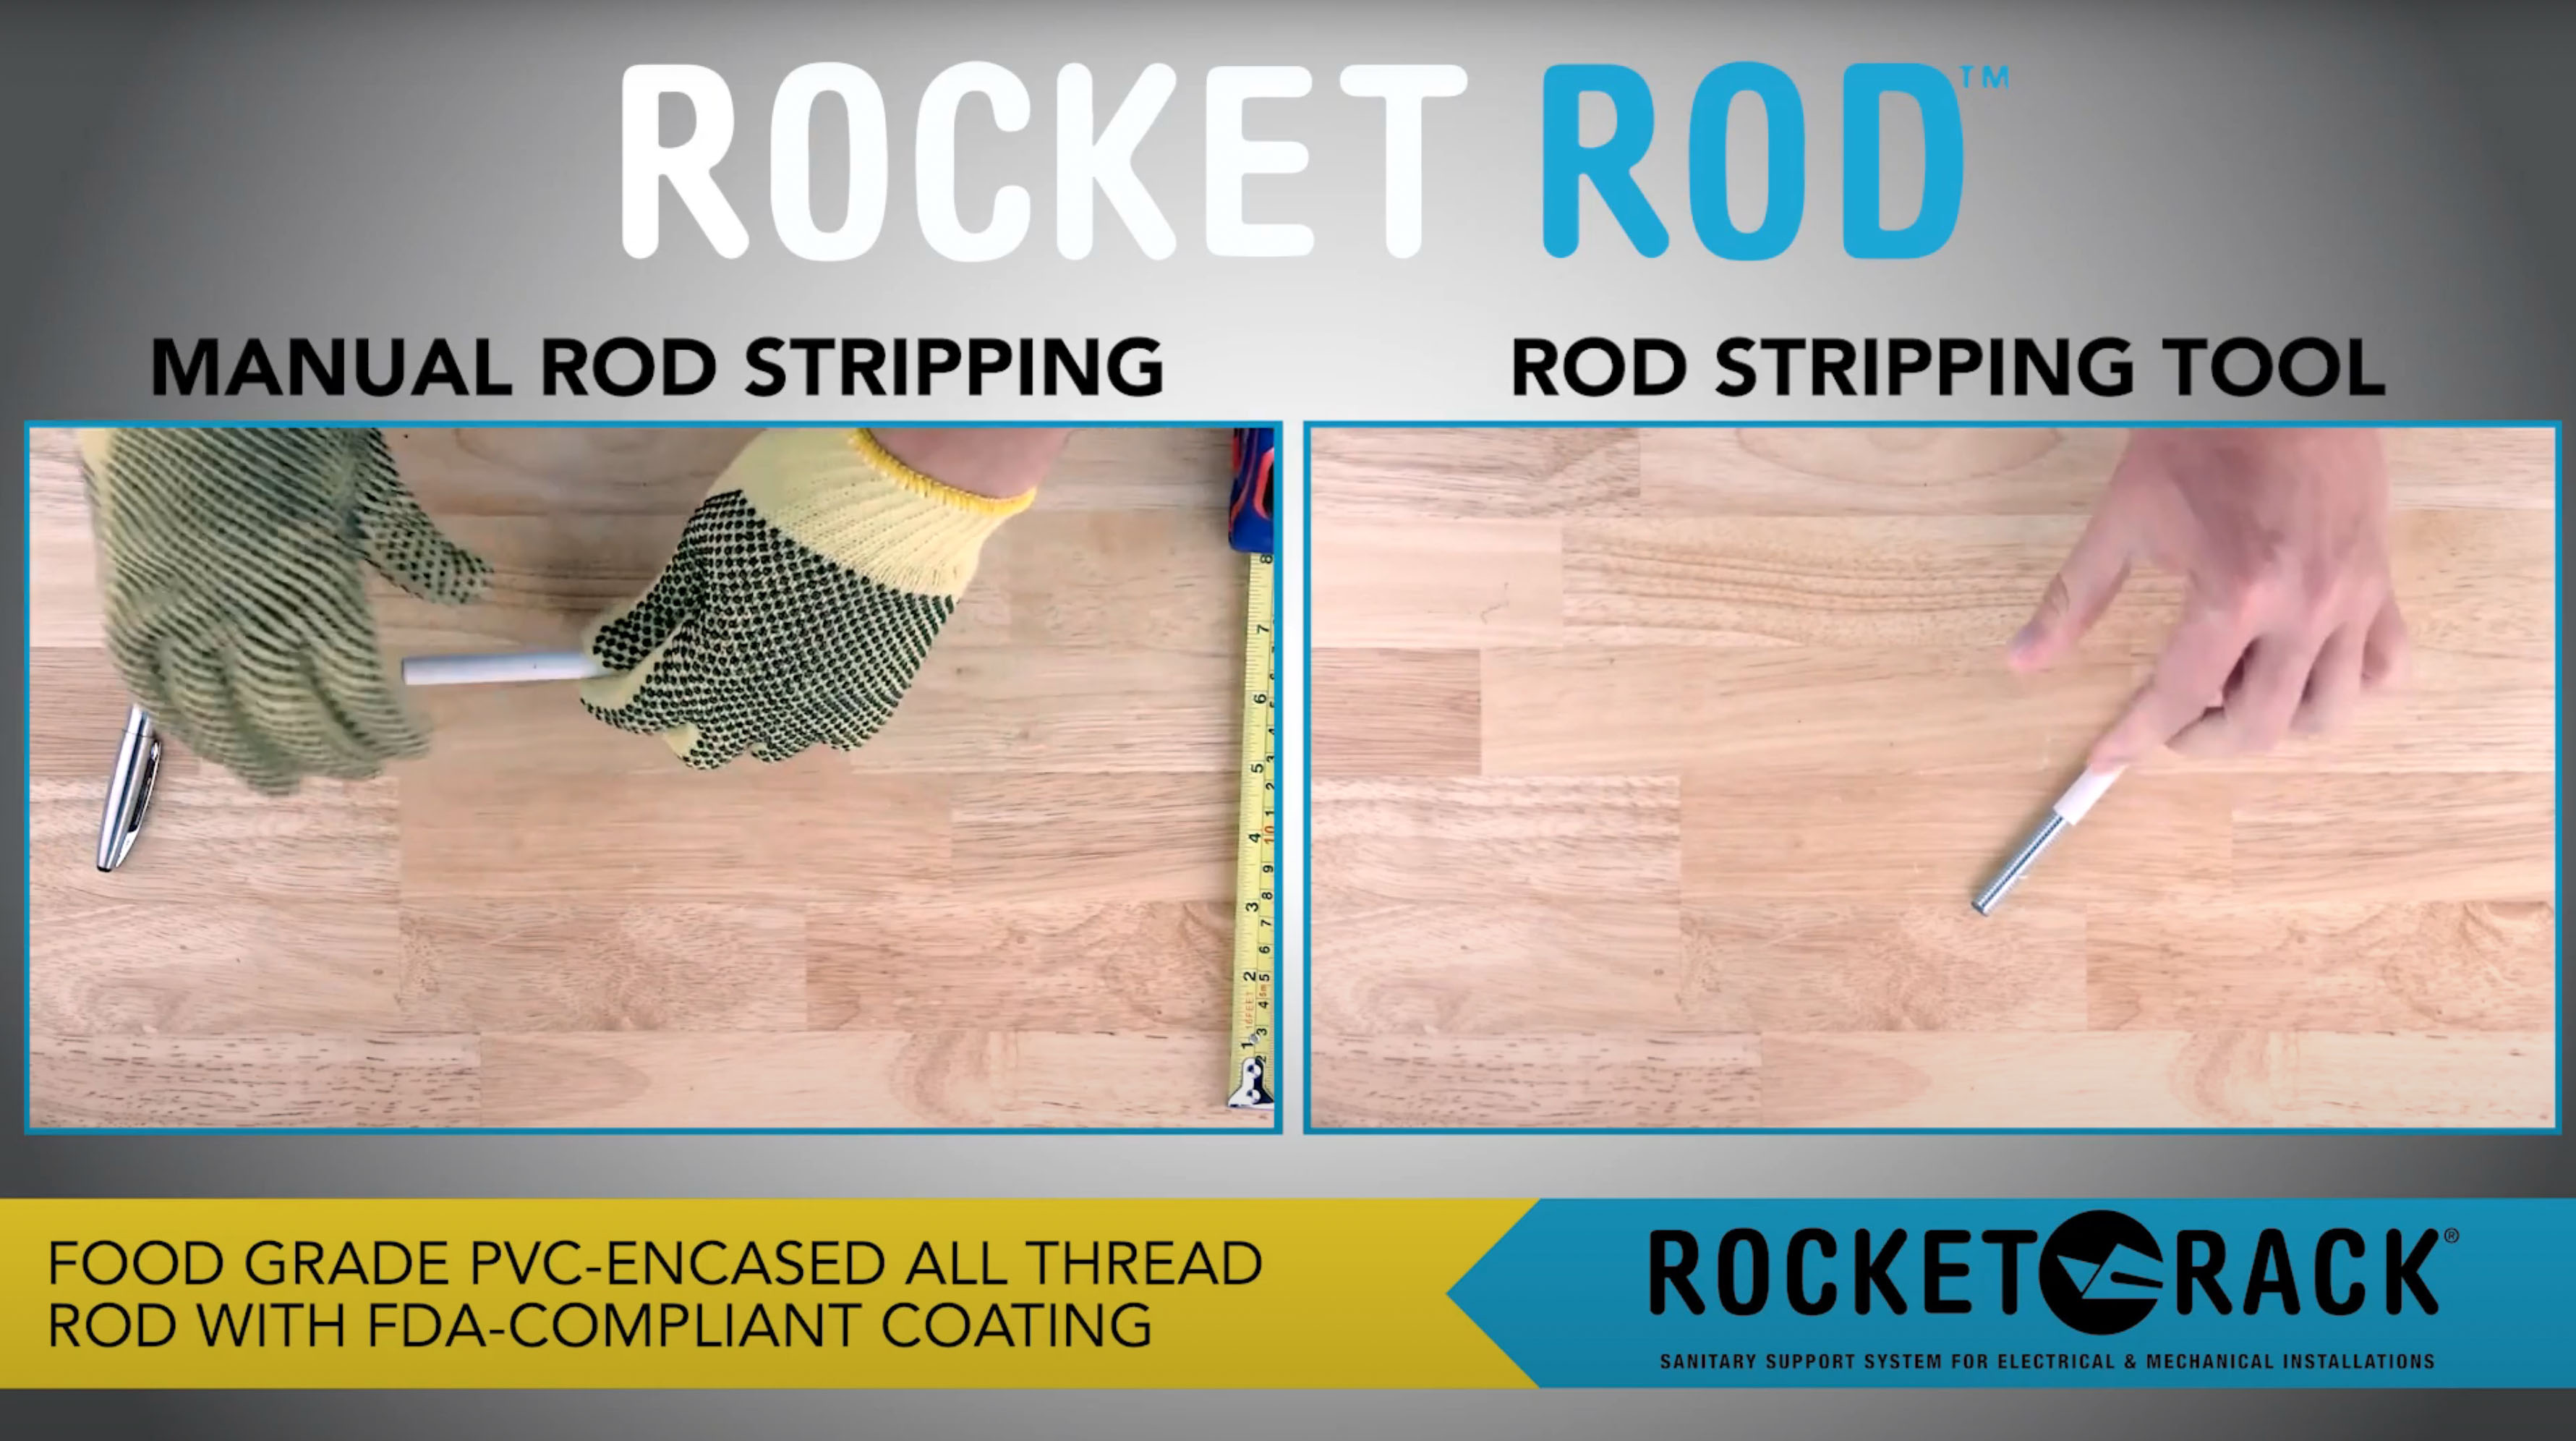 Rocket Rod™ Manual Rod Stripping vs. Rod Stripping Tool